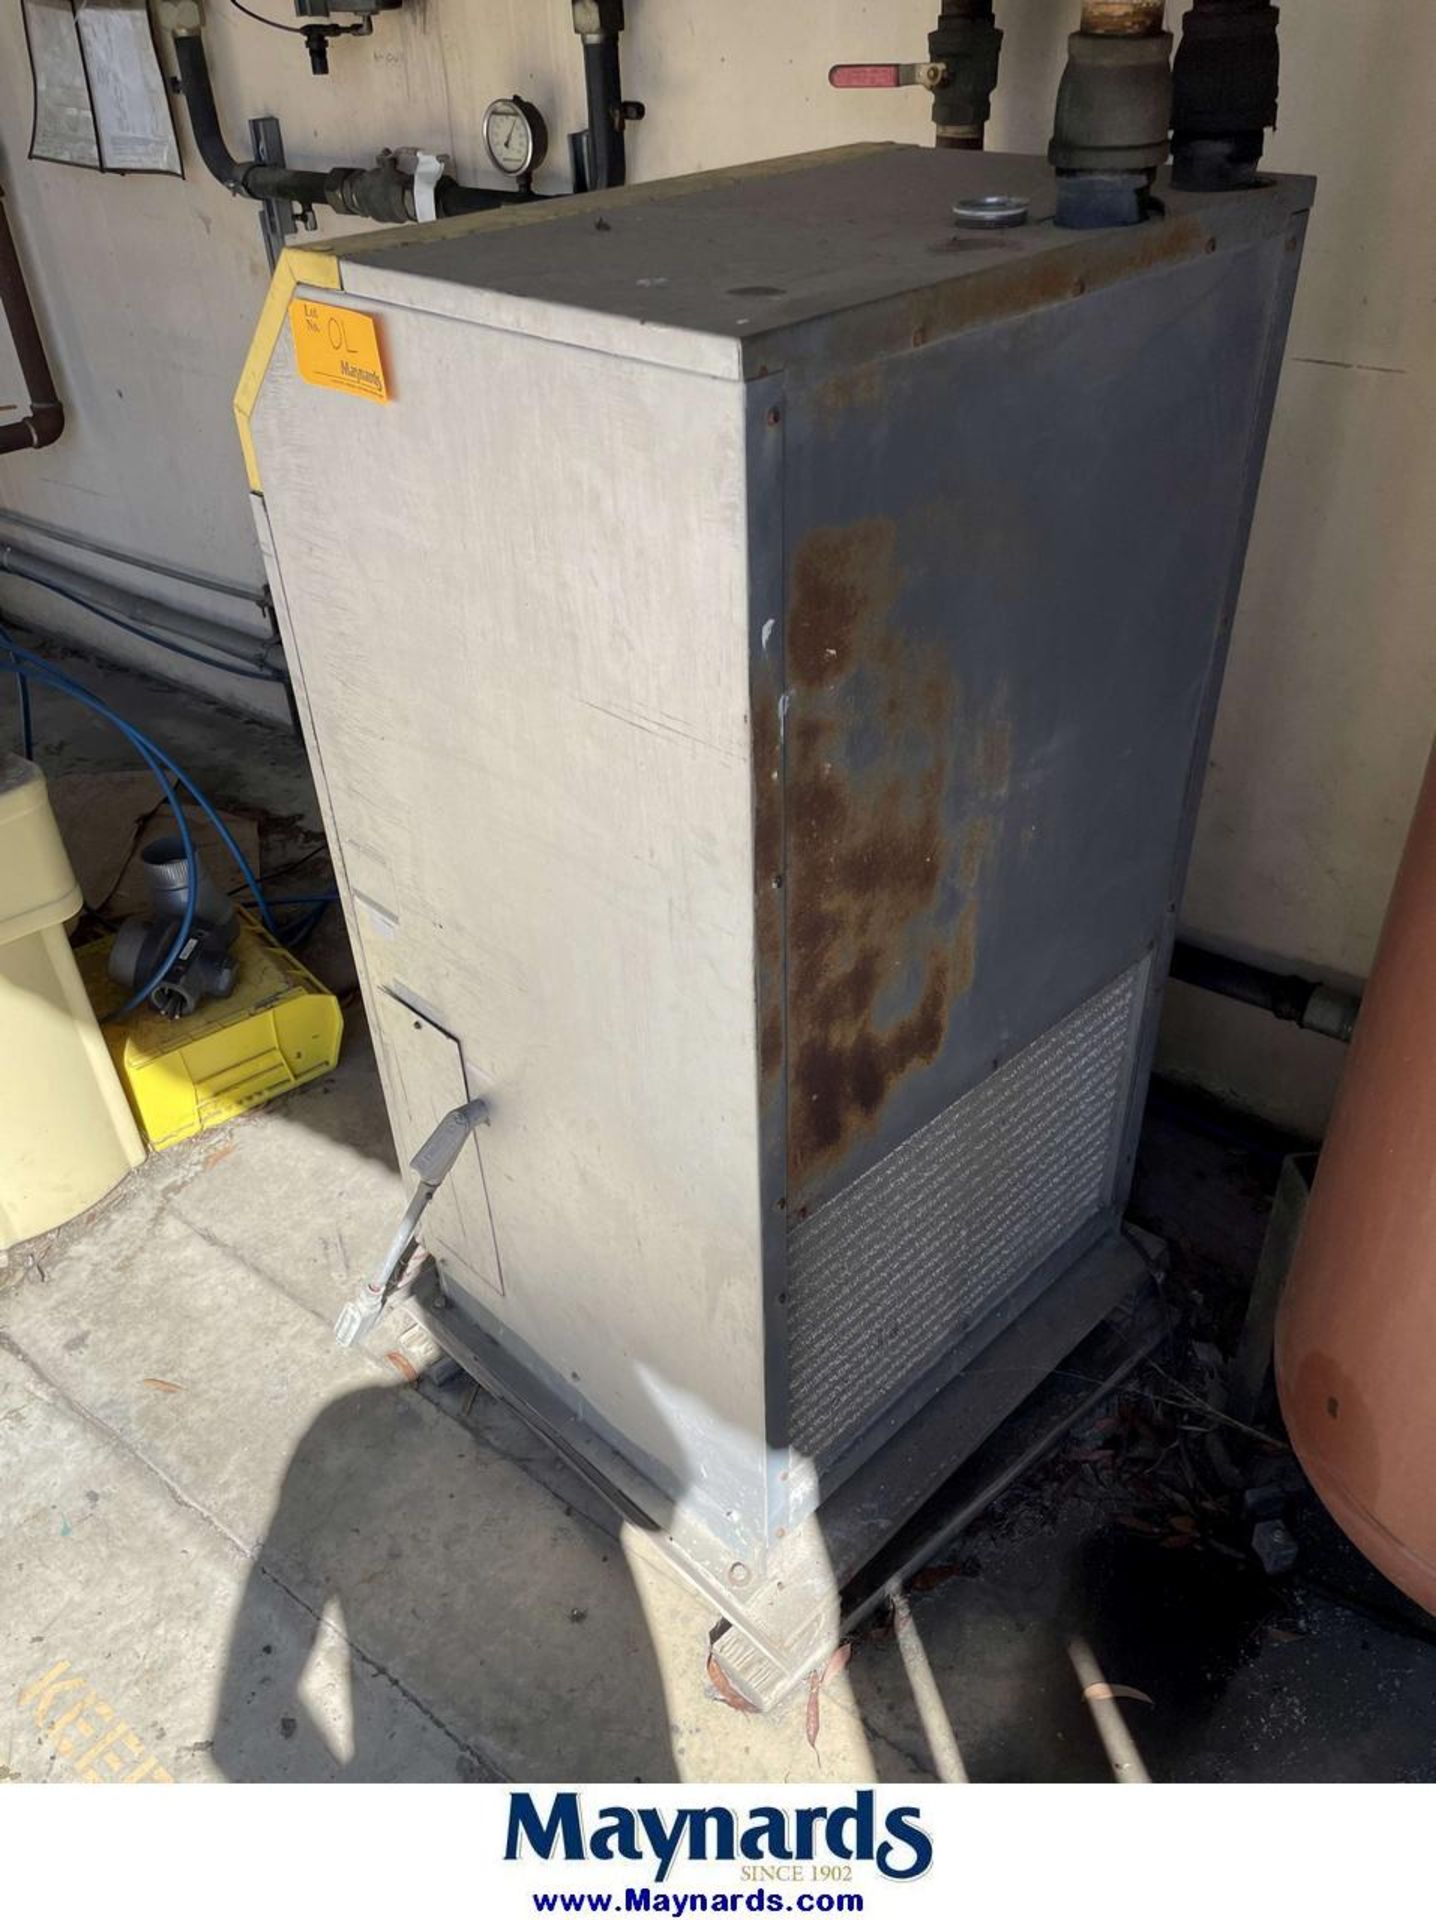 Zeks HeatSink Refrigerated Air Dryer (Display Board Does Not Work) - Image 3 of 5